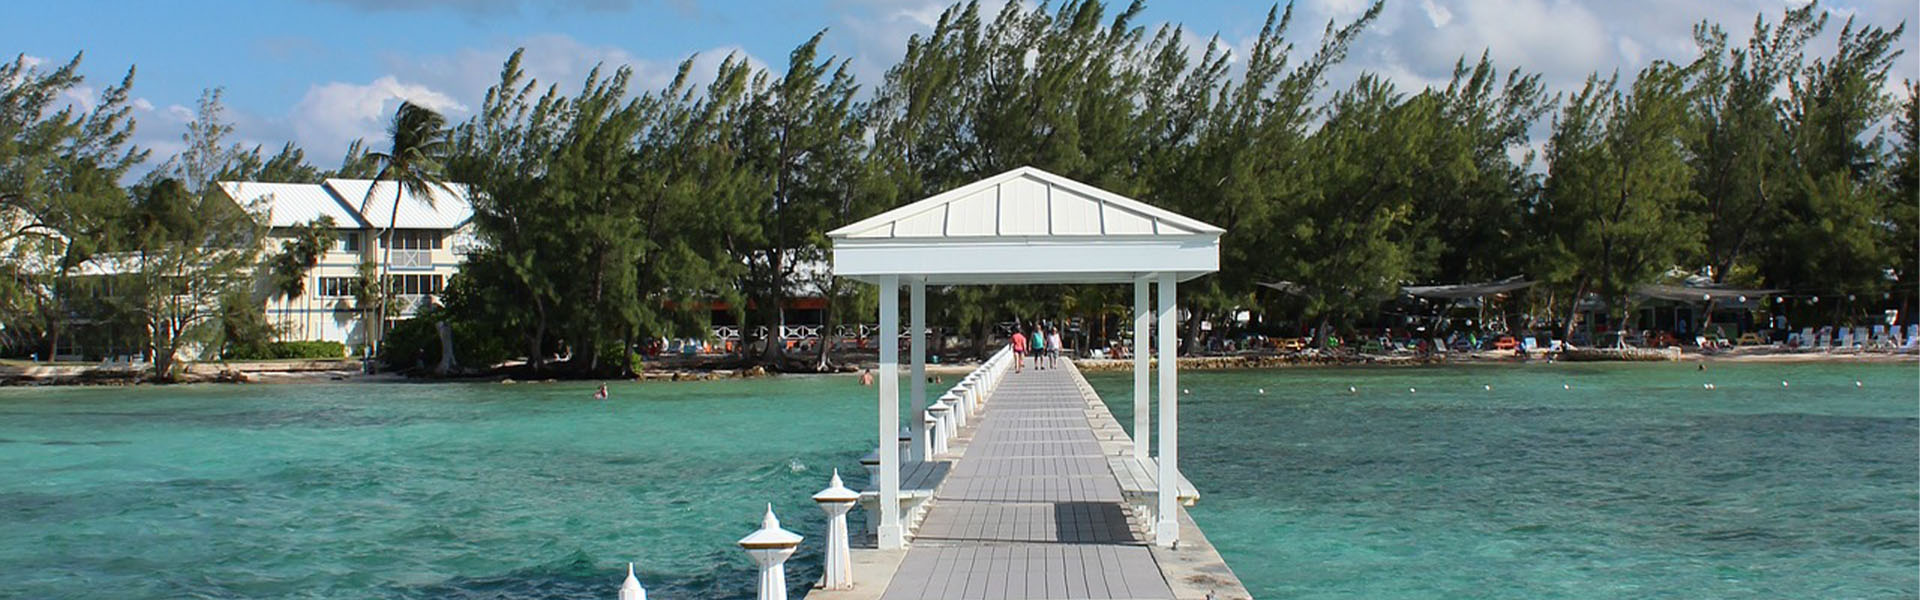 Villas on Seven Mile Beach, Grand Cayman - rum point beach